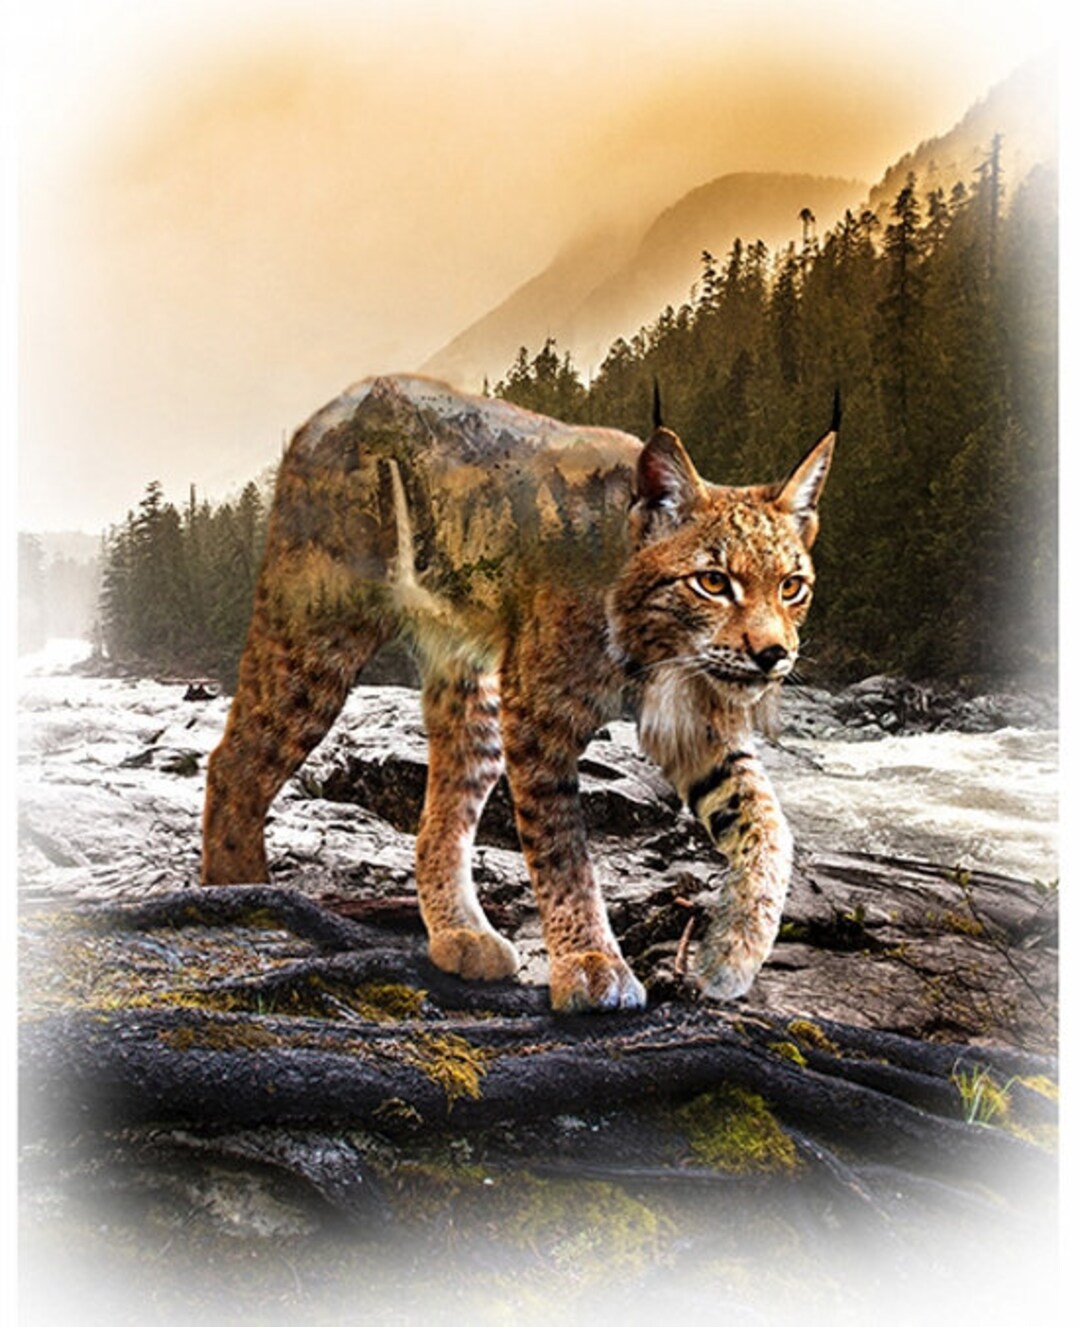 CapCut_bobcat and lynx